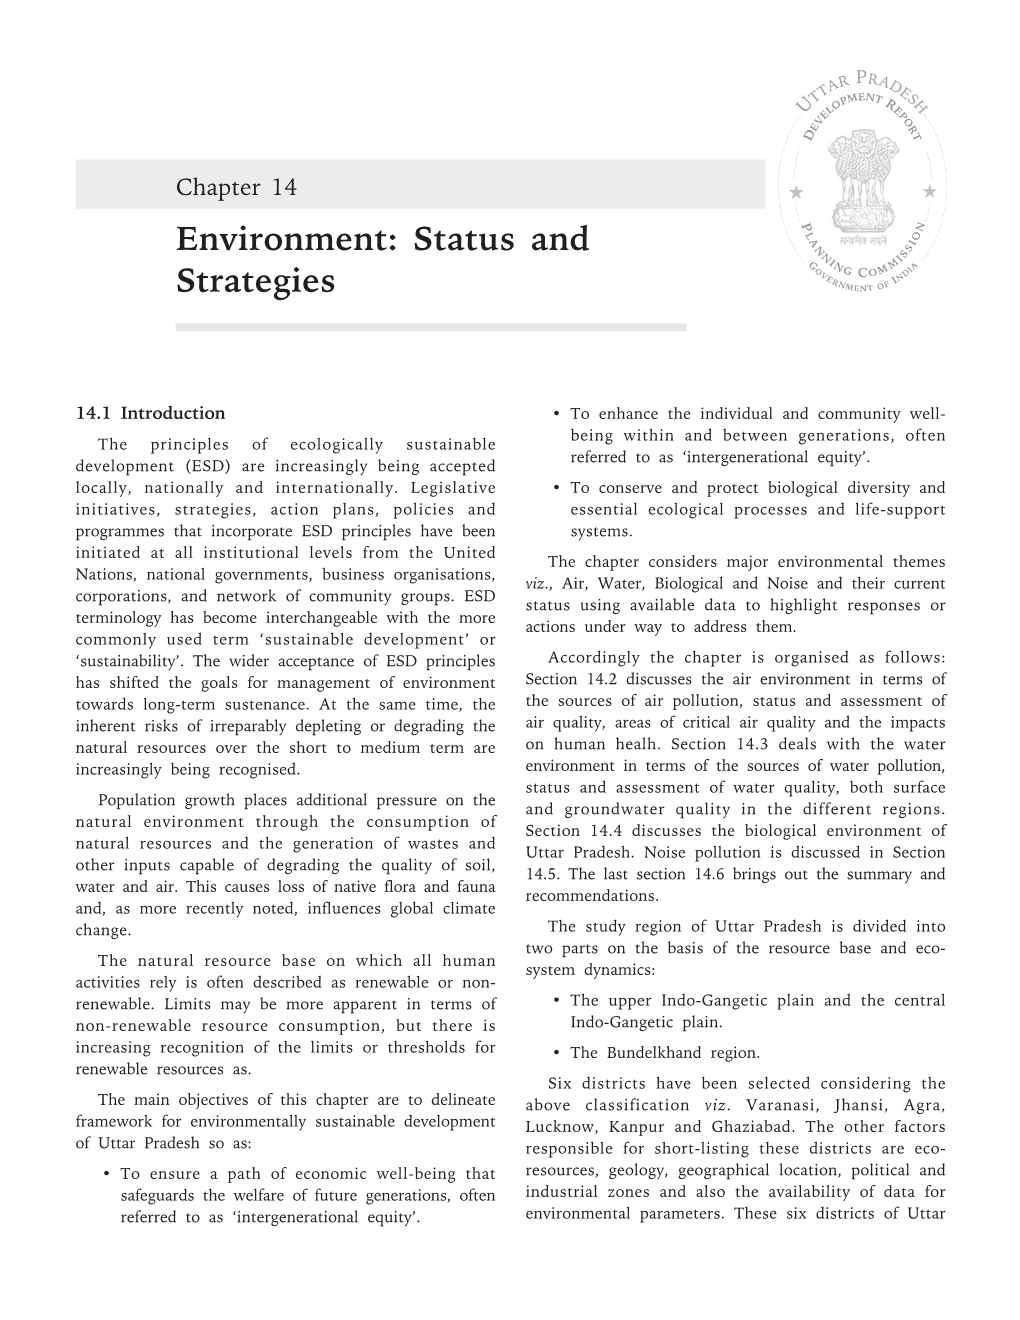 Environment: Status and Strategies